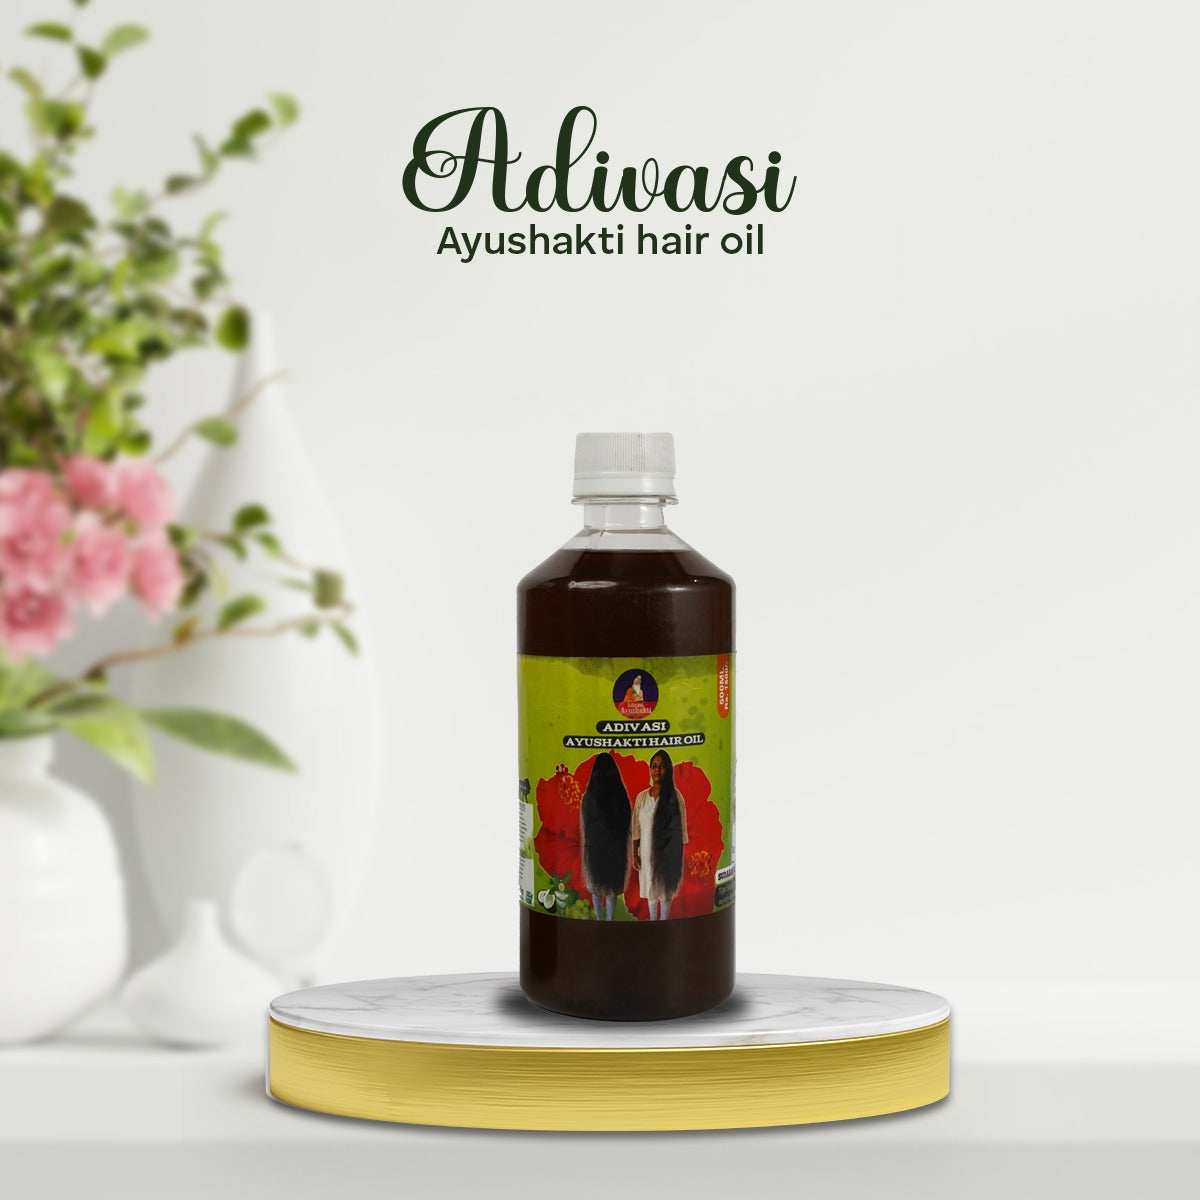 Adivasi AyuShakti Herbal Hair Oil